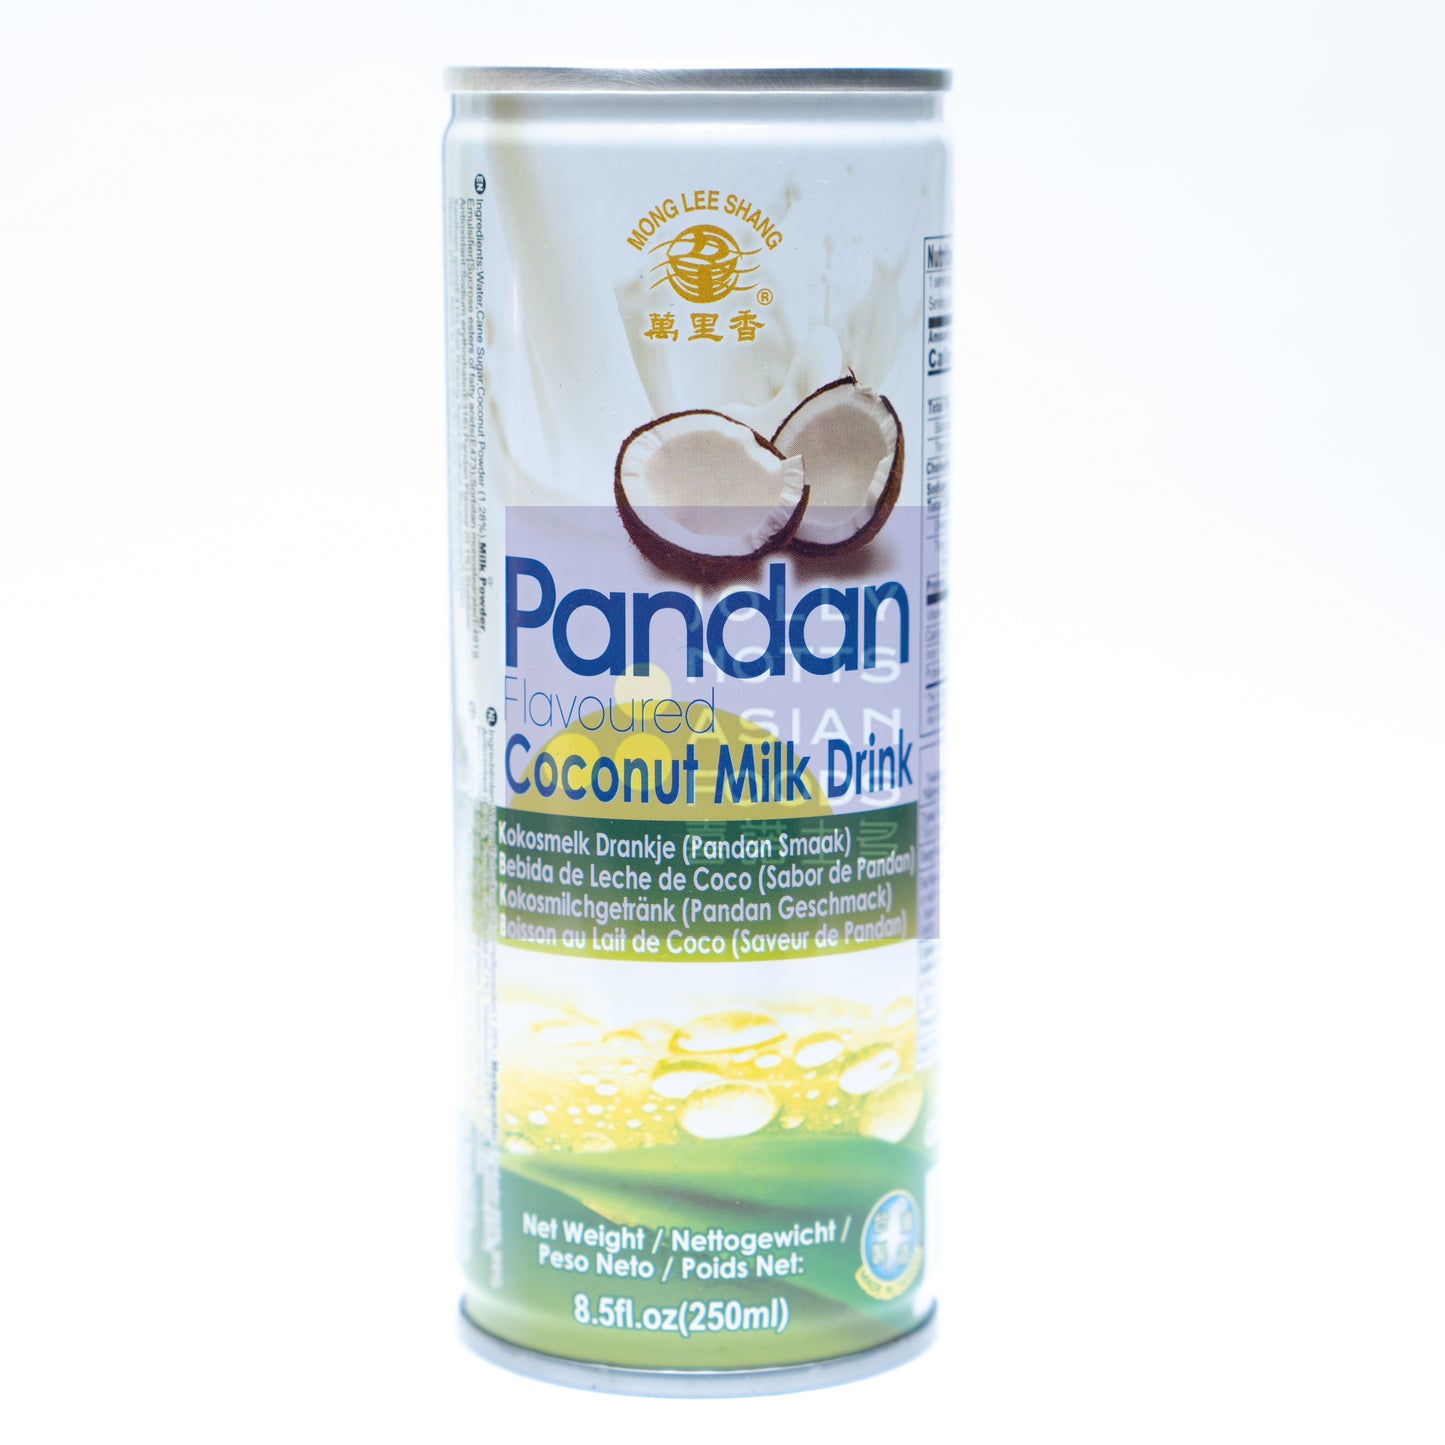 MLS Pandon Coconut Milk Drink 萬里香班蘭椰奶飲品